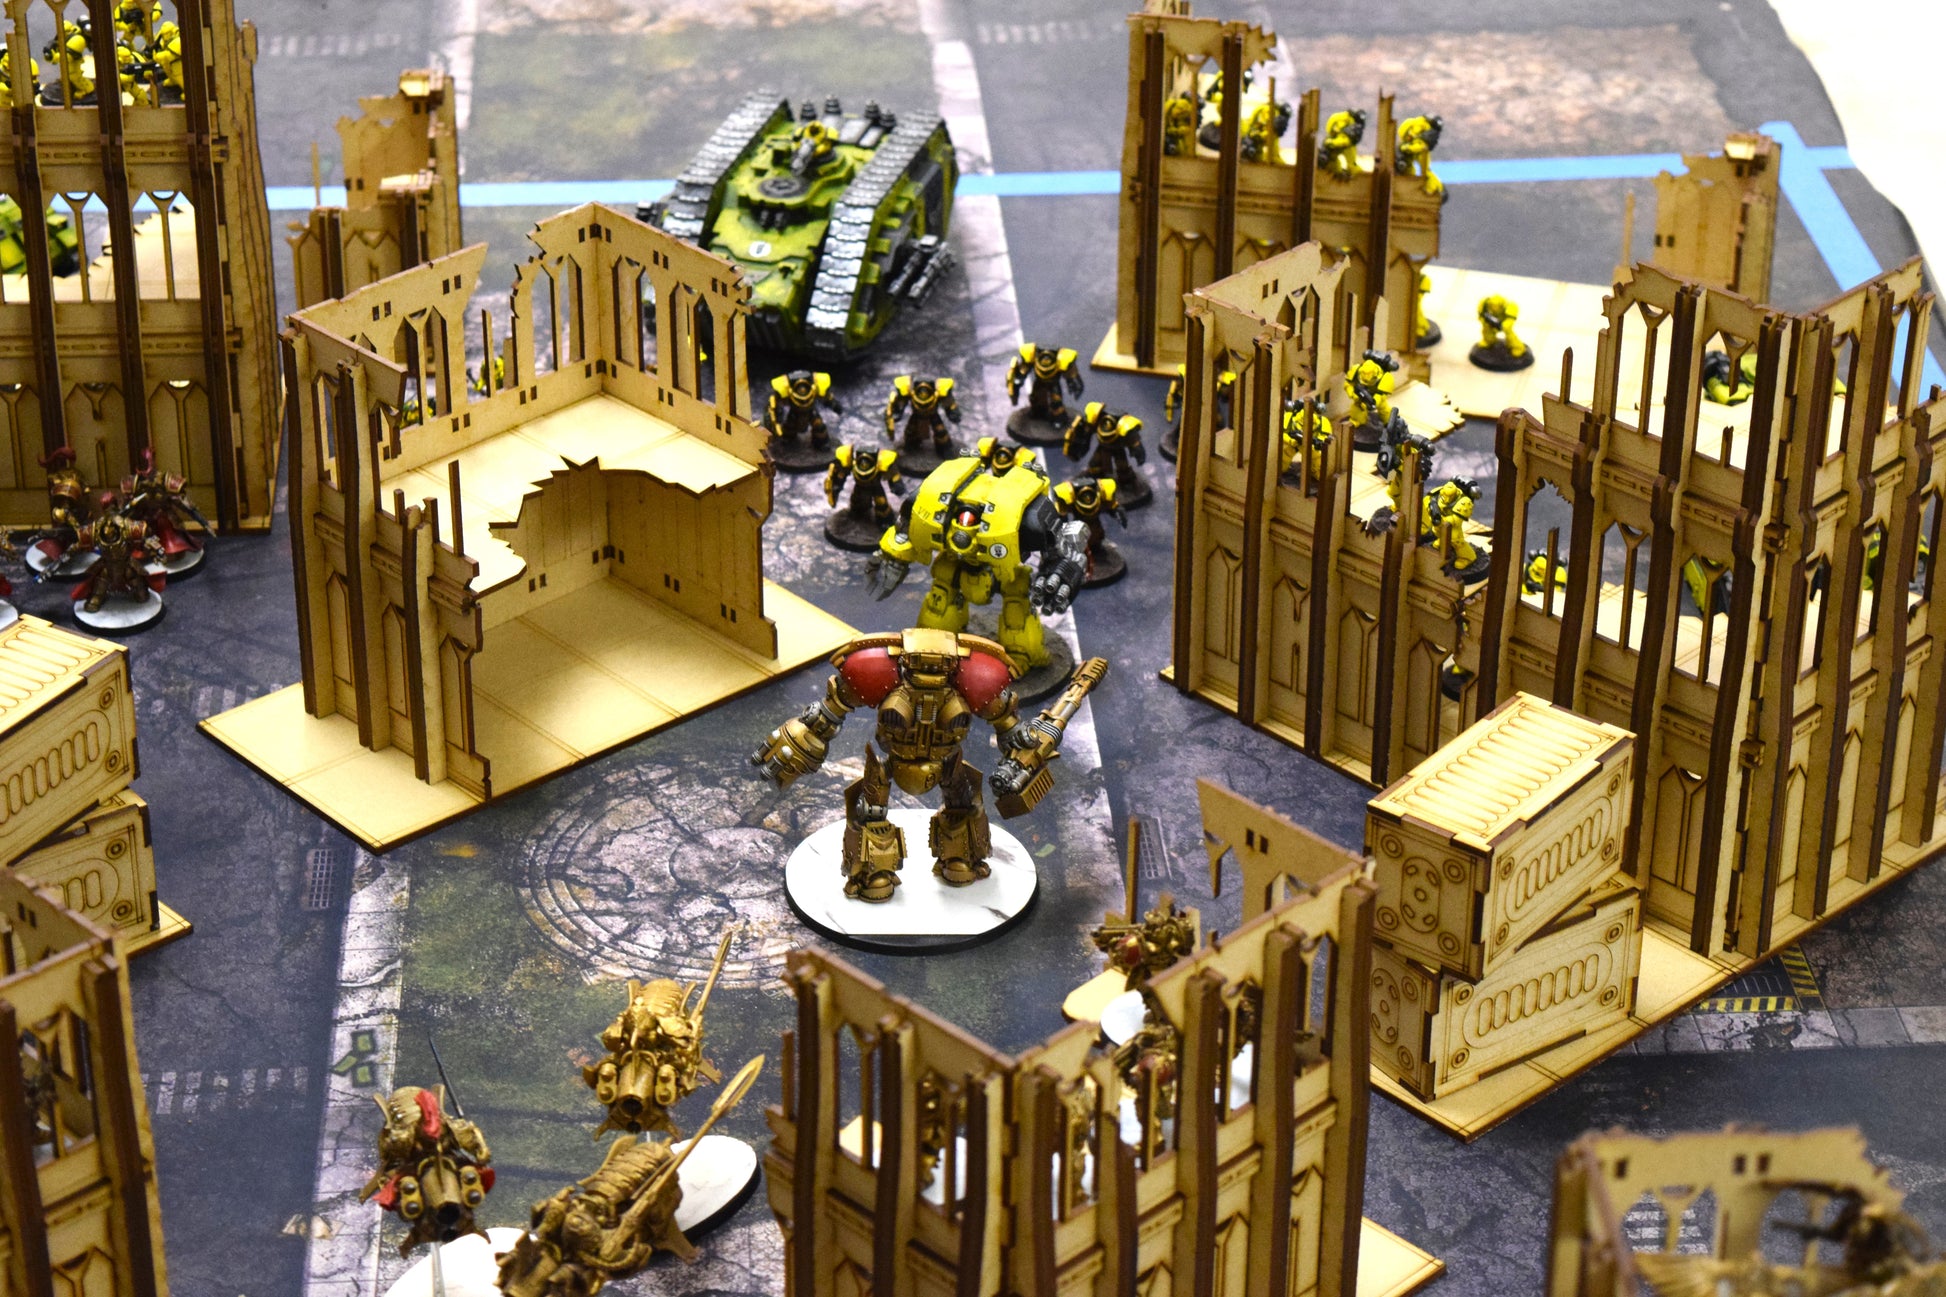 Warhammer 40k Terrain Set, 5 Terrain Pieces, Two-tiered Building